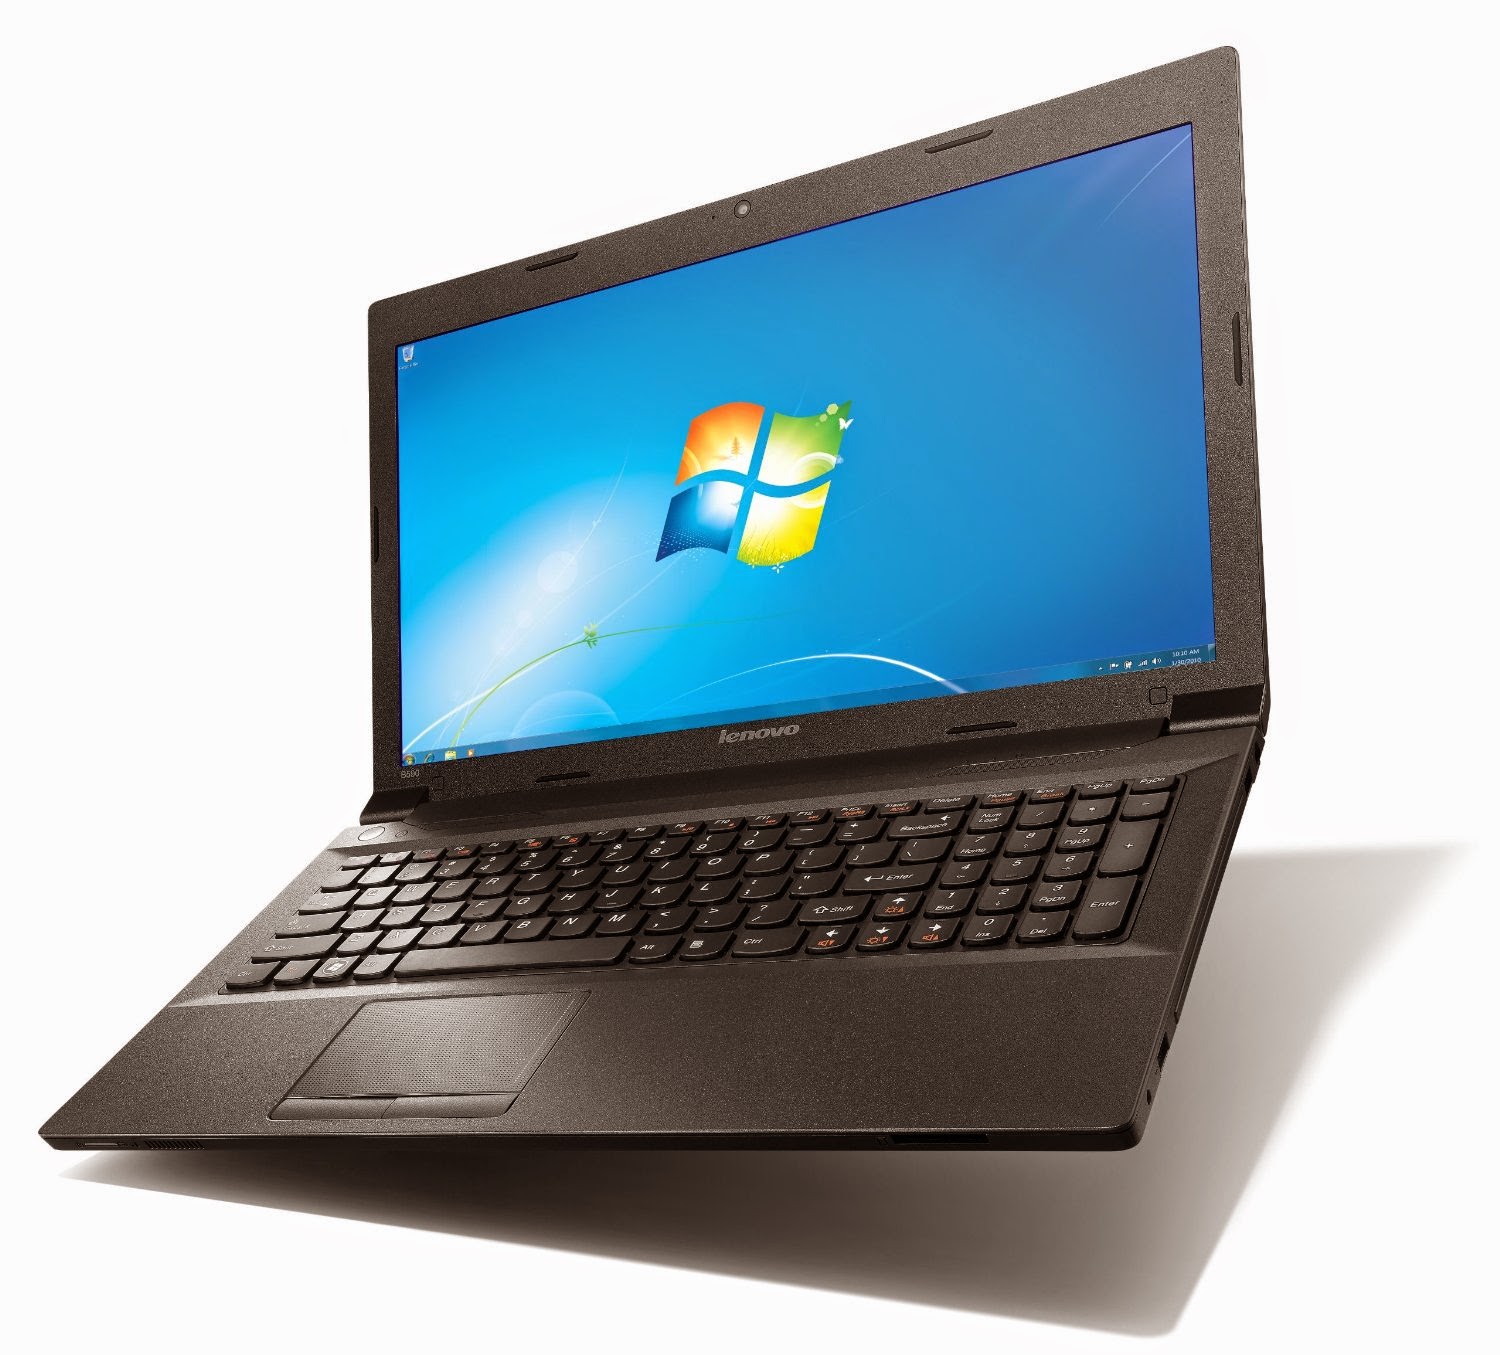 PC Gadget Review: Lenovo B590 Windows 7 Pentium 15.6-Inch Laptop (Black